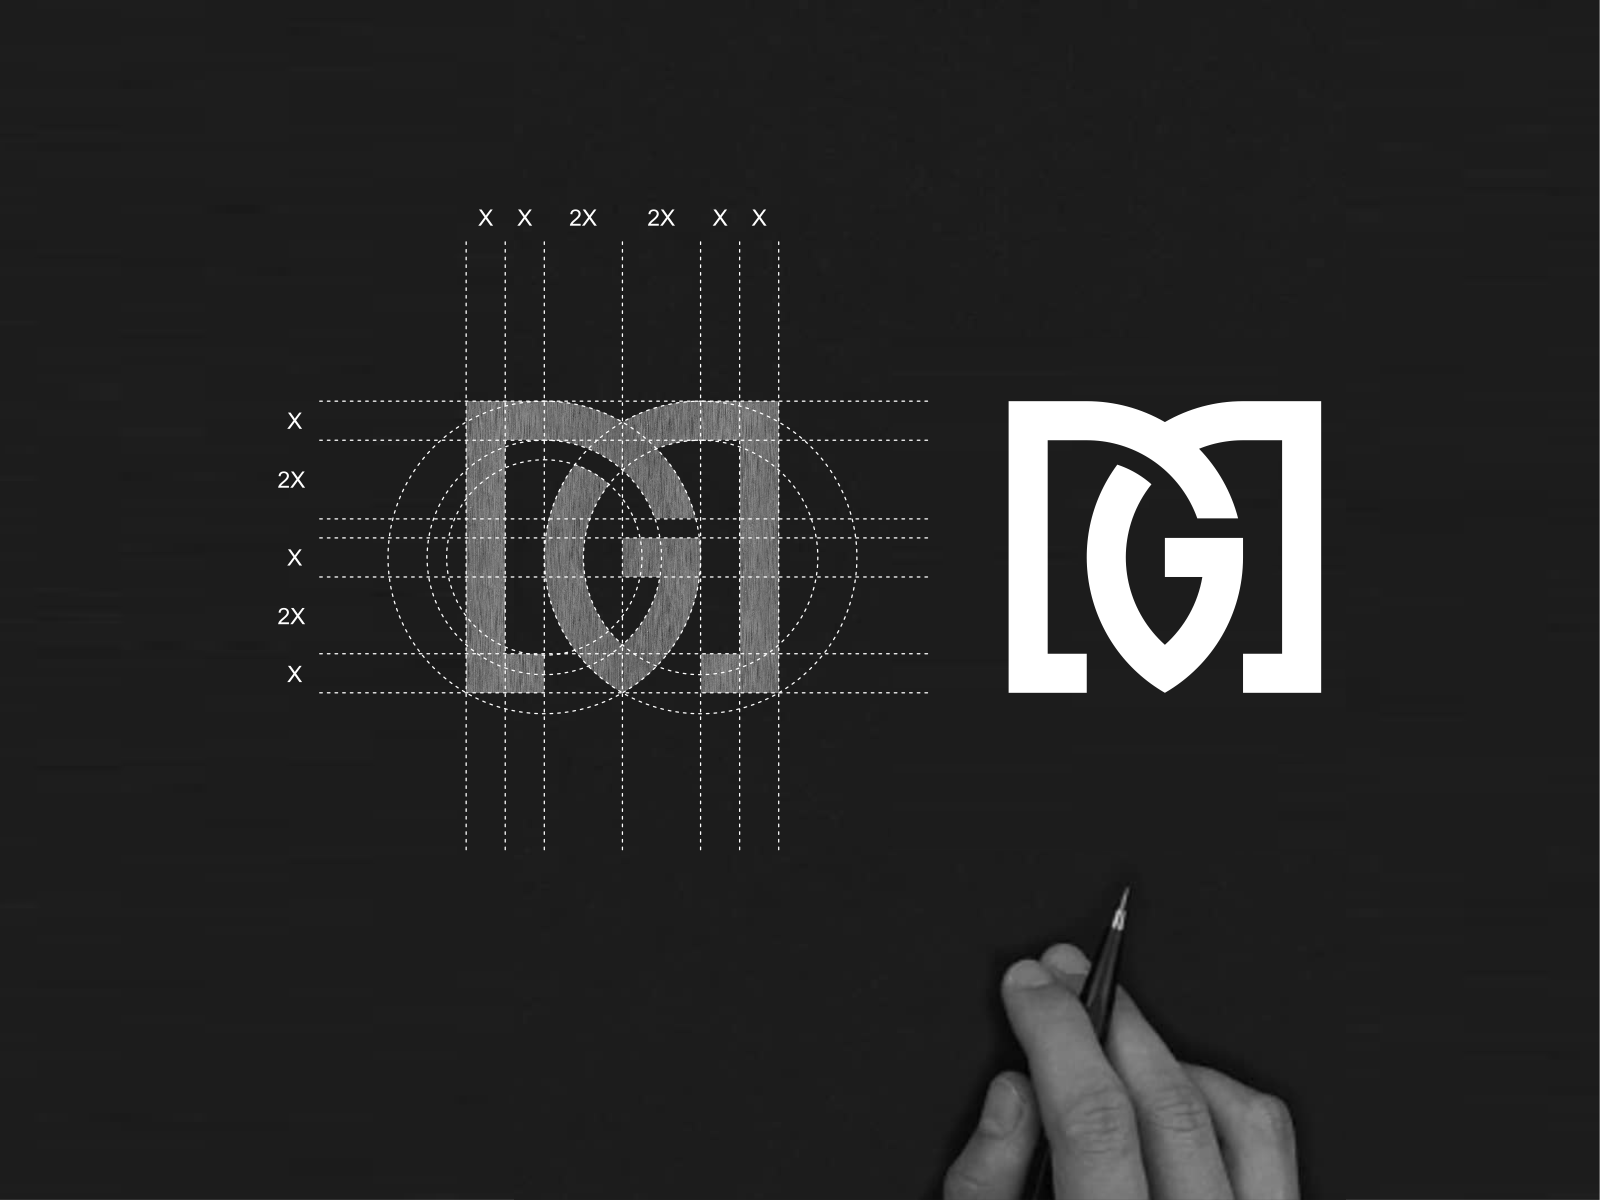 MG monogram logo by santuy_dsgn on Dribbble